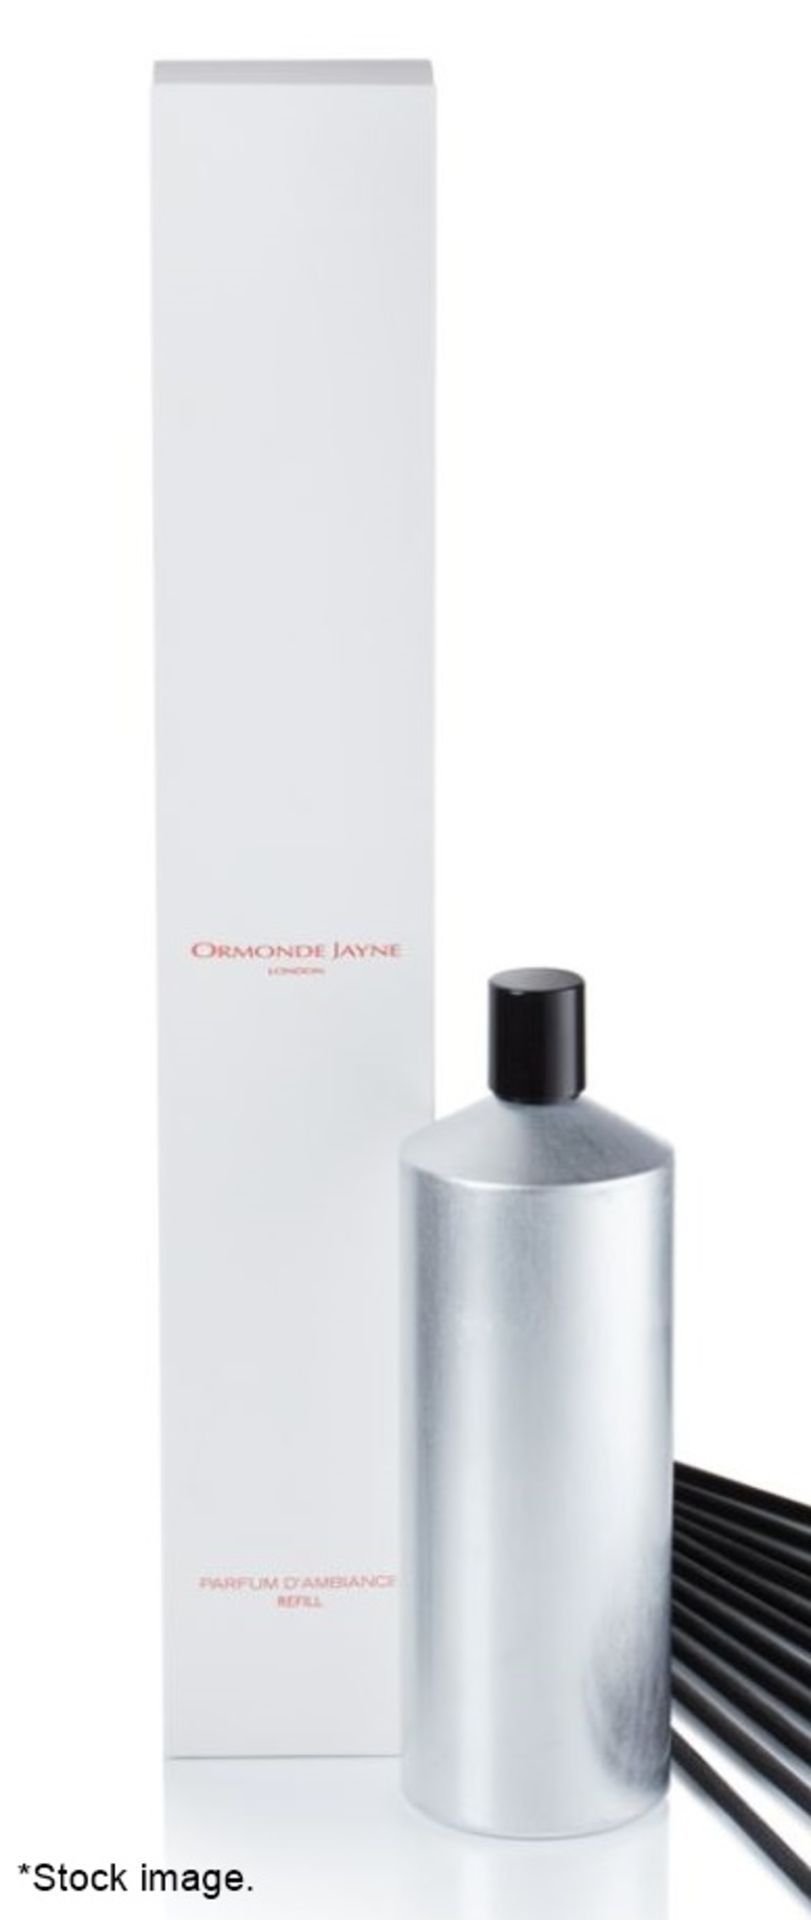 1 x ORMONDE JAYNE 'Casablanca' Diffuser Fragrance Refill, 500ml - Original Price £95.00 - Boxed